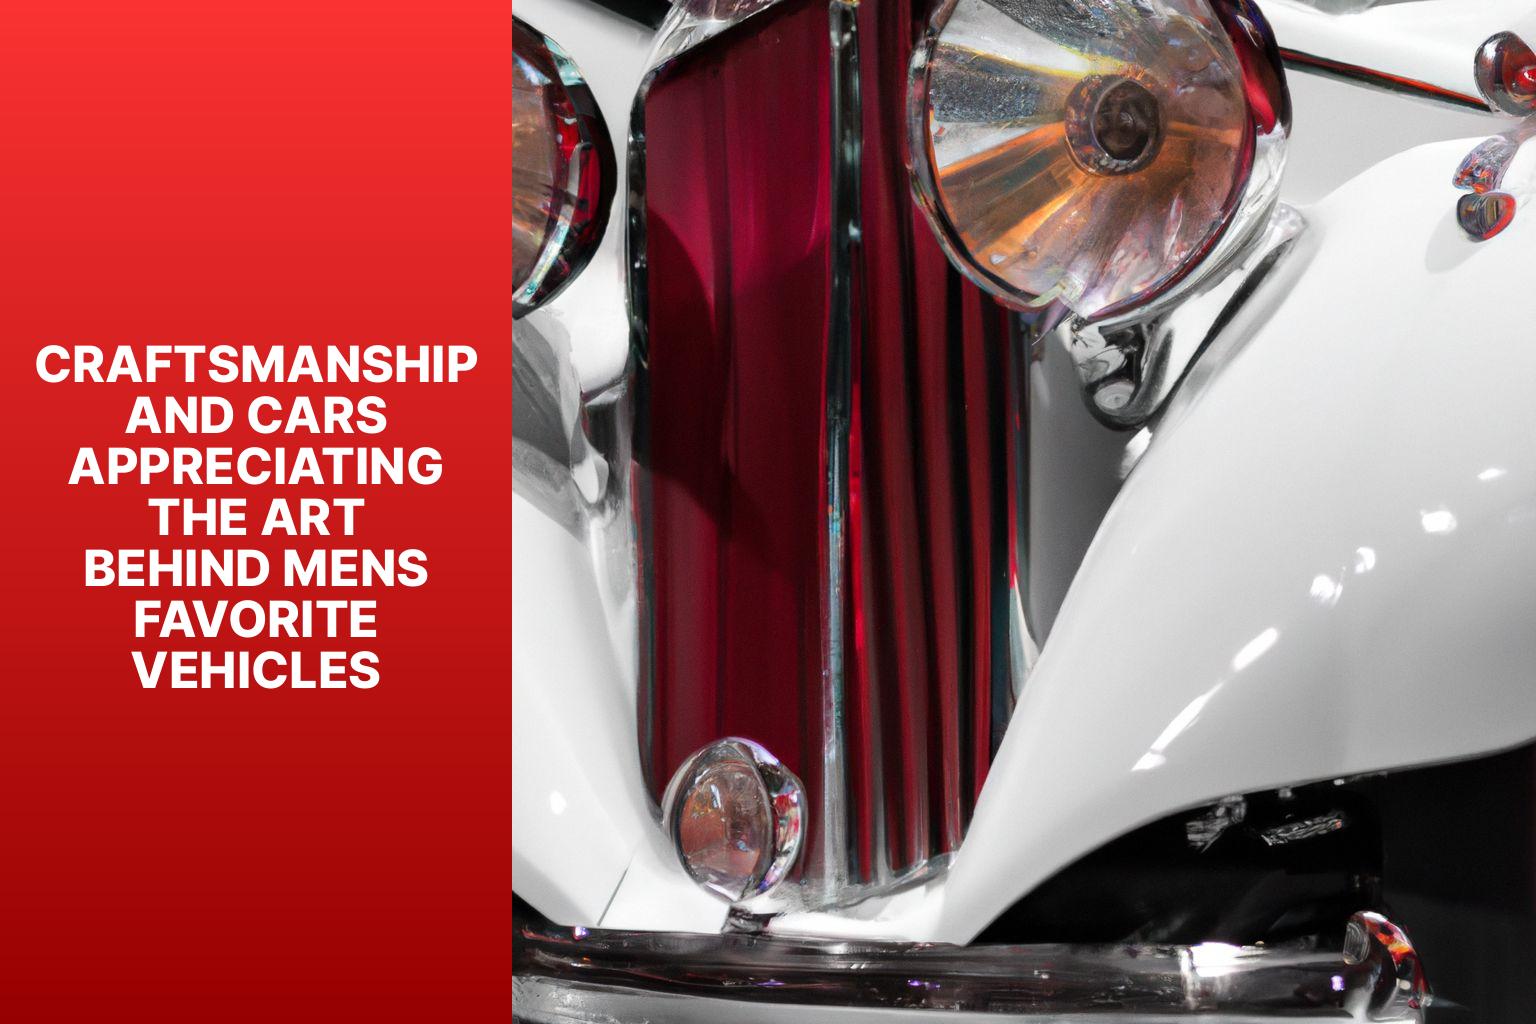 Craftsmanship and Cars: Appreciating the Art Behind Men’s Favorite Vehicles